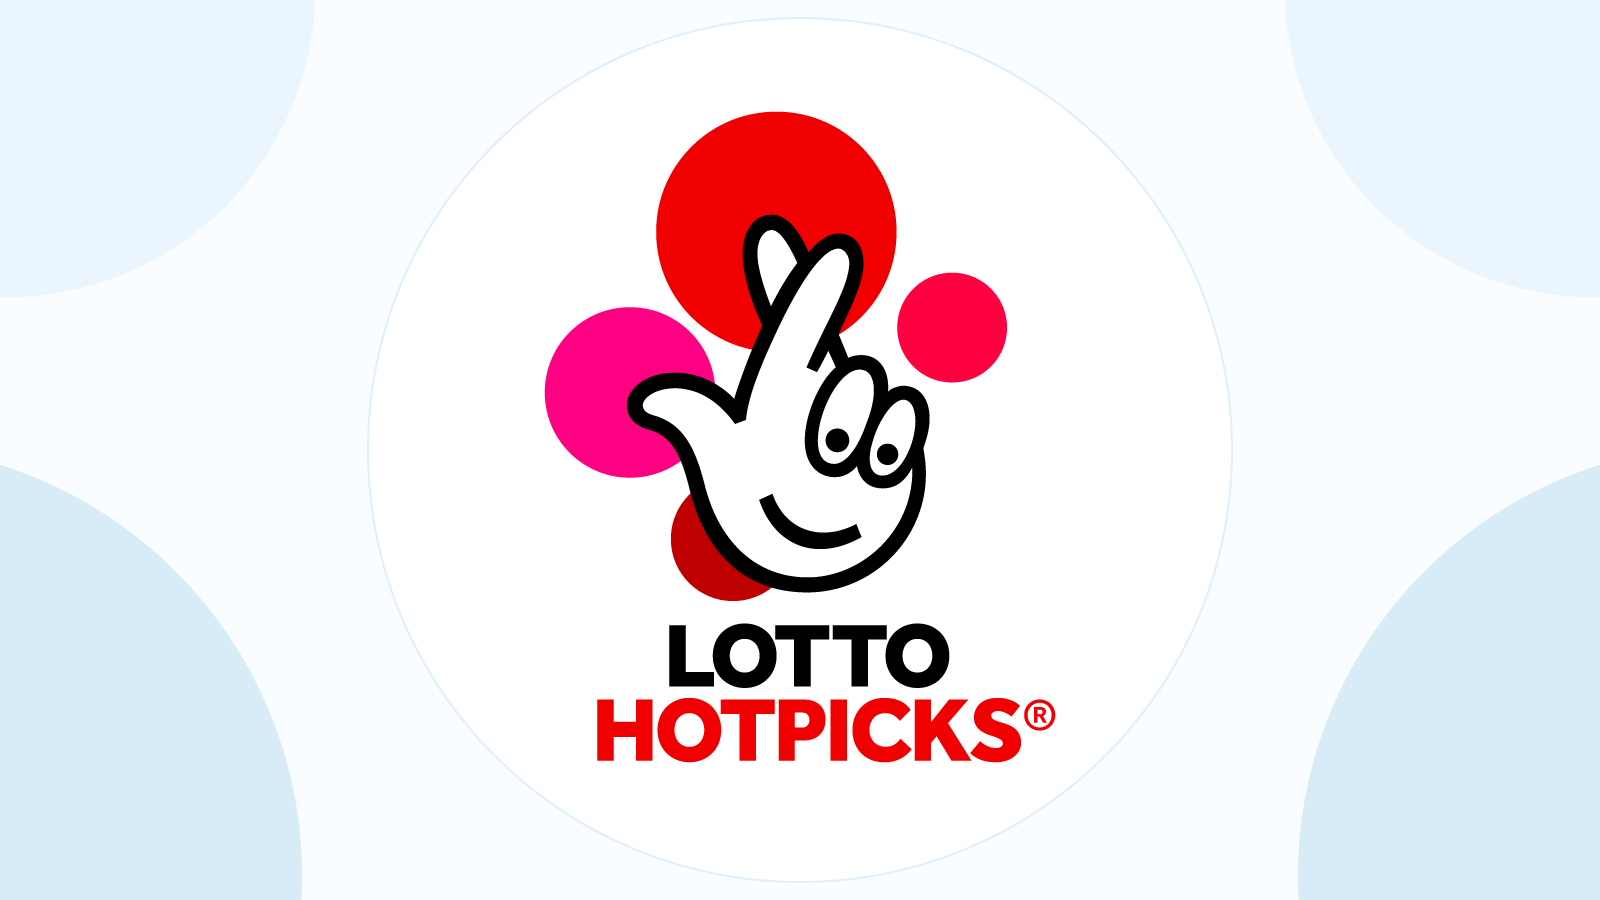 Lotto HotPicks